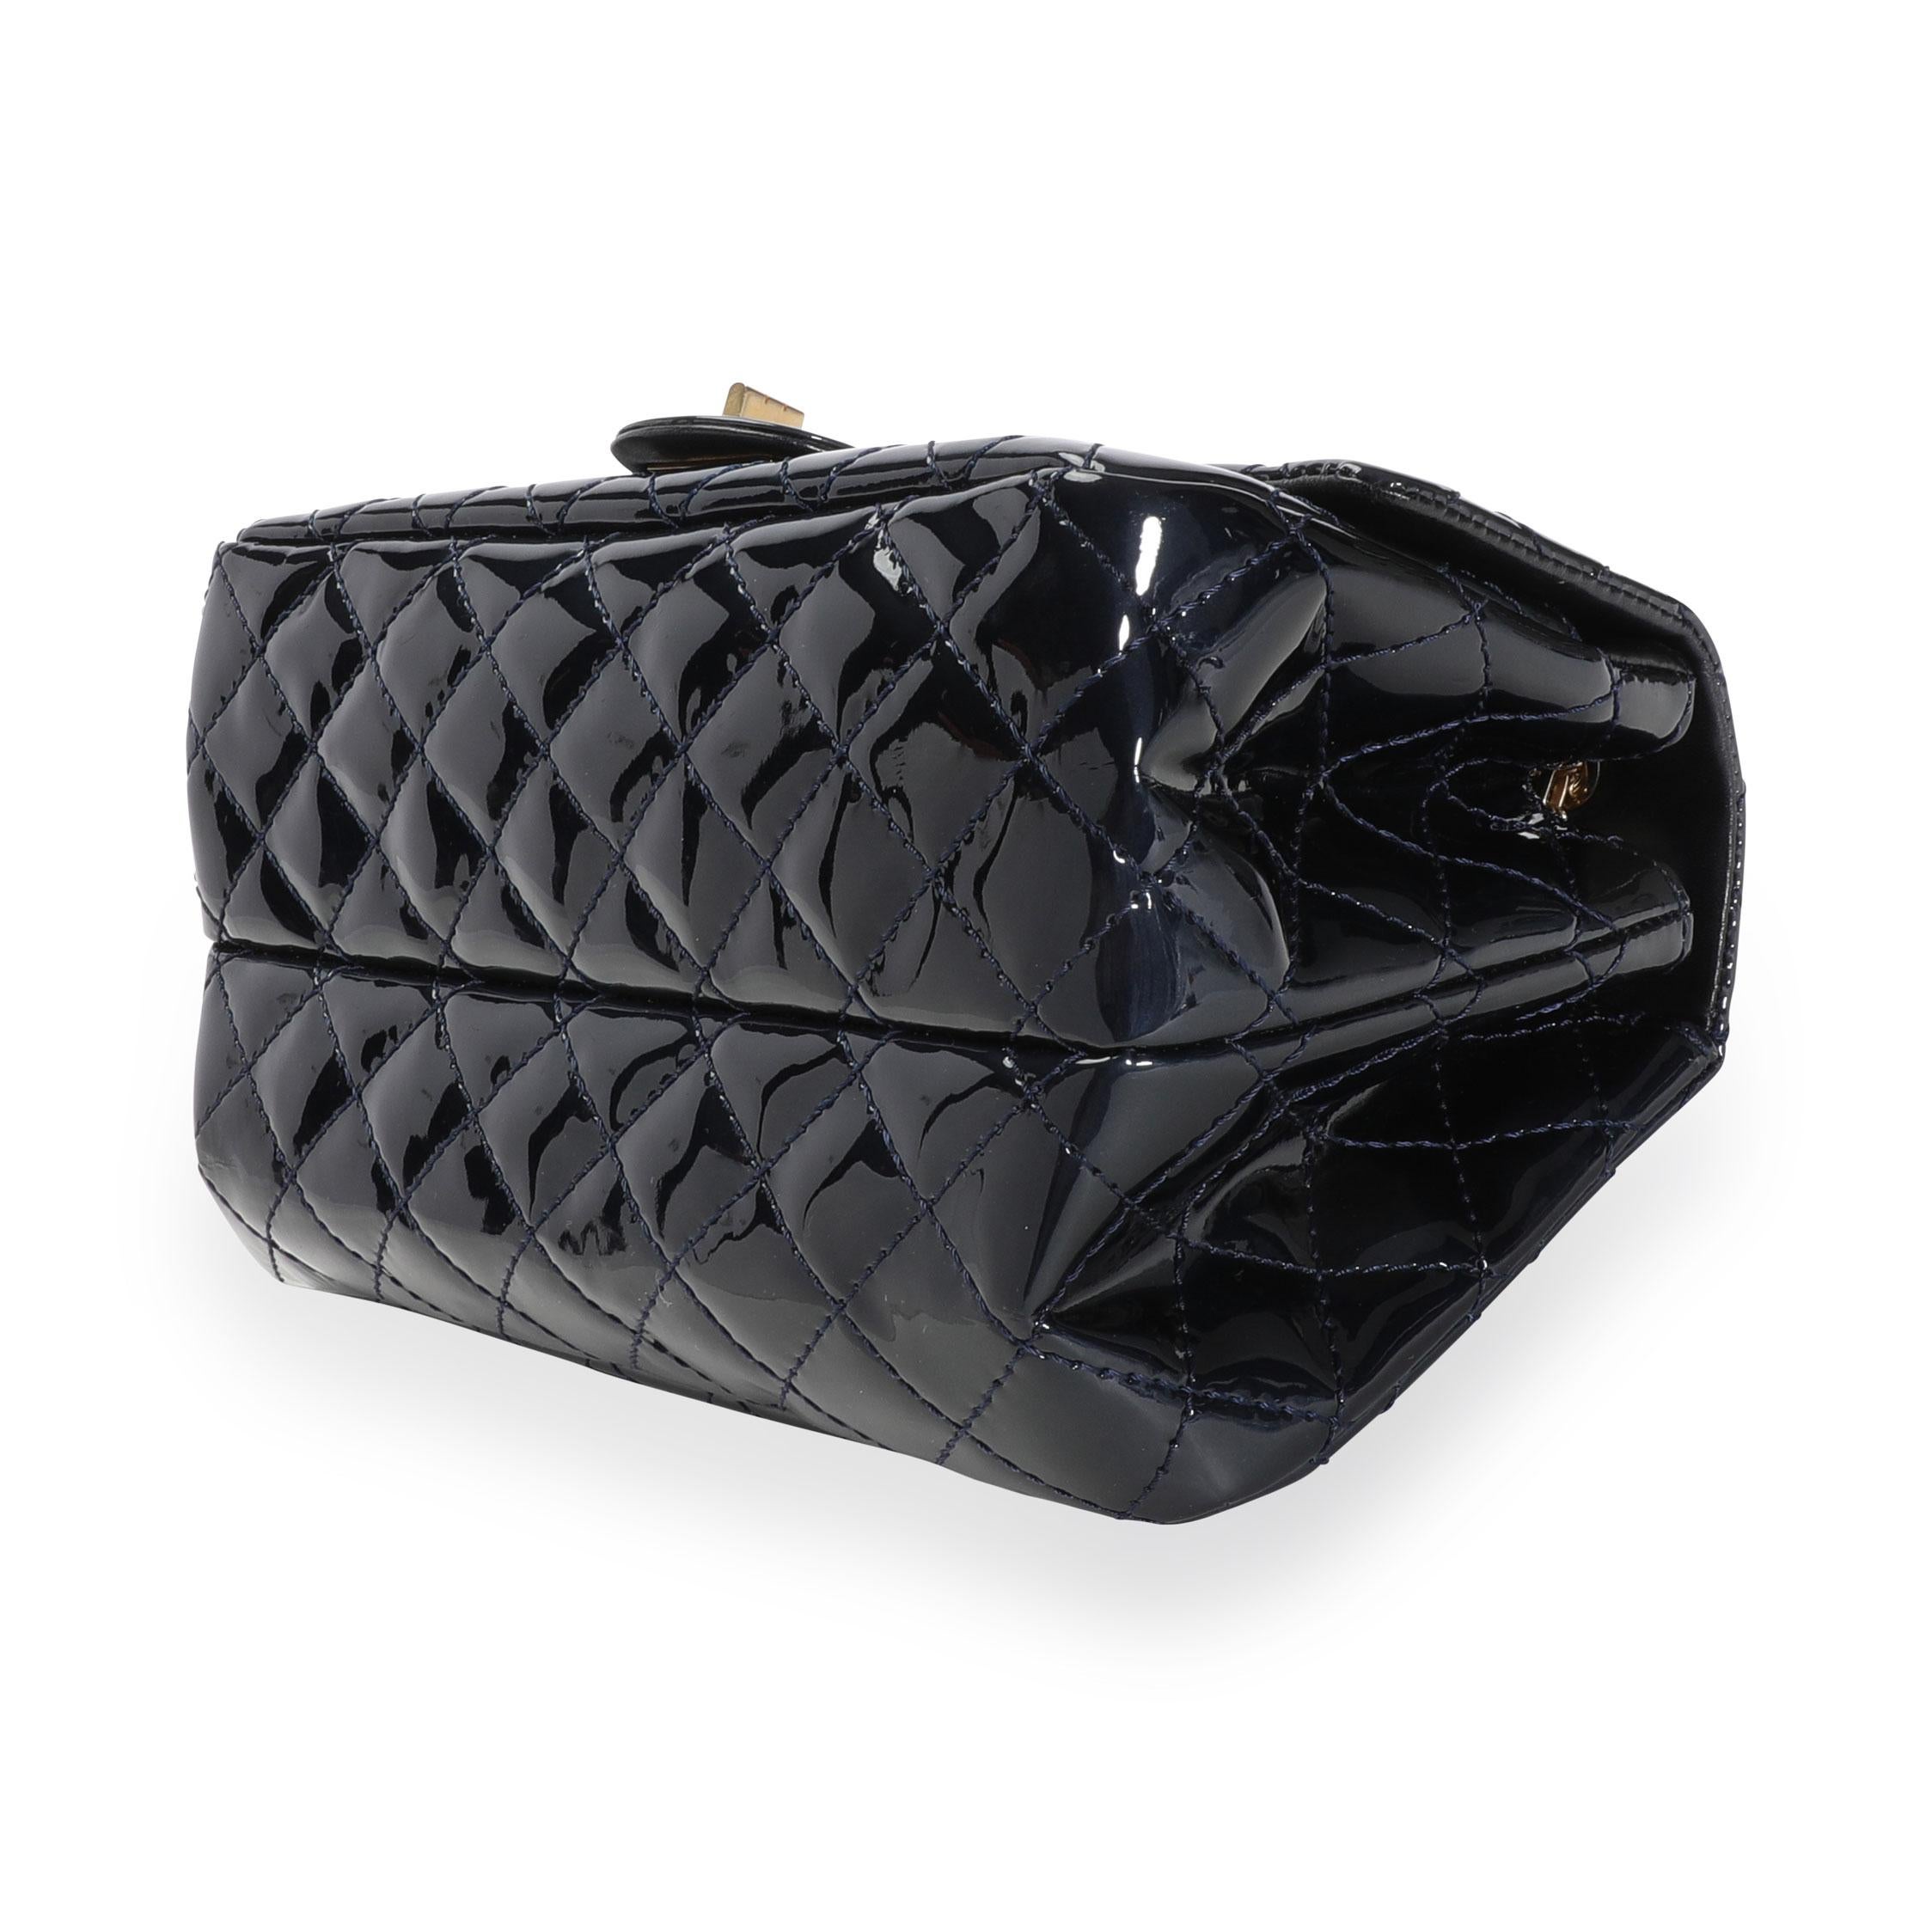 Chanel Marine Foncé Quilted Patent Leather Reissue Double Compartment Flap Bag 4